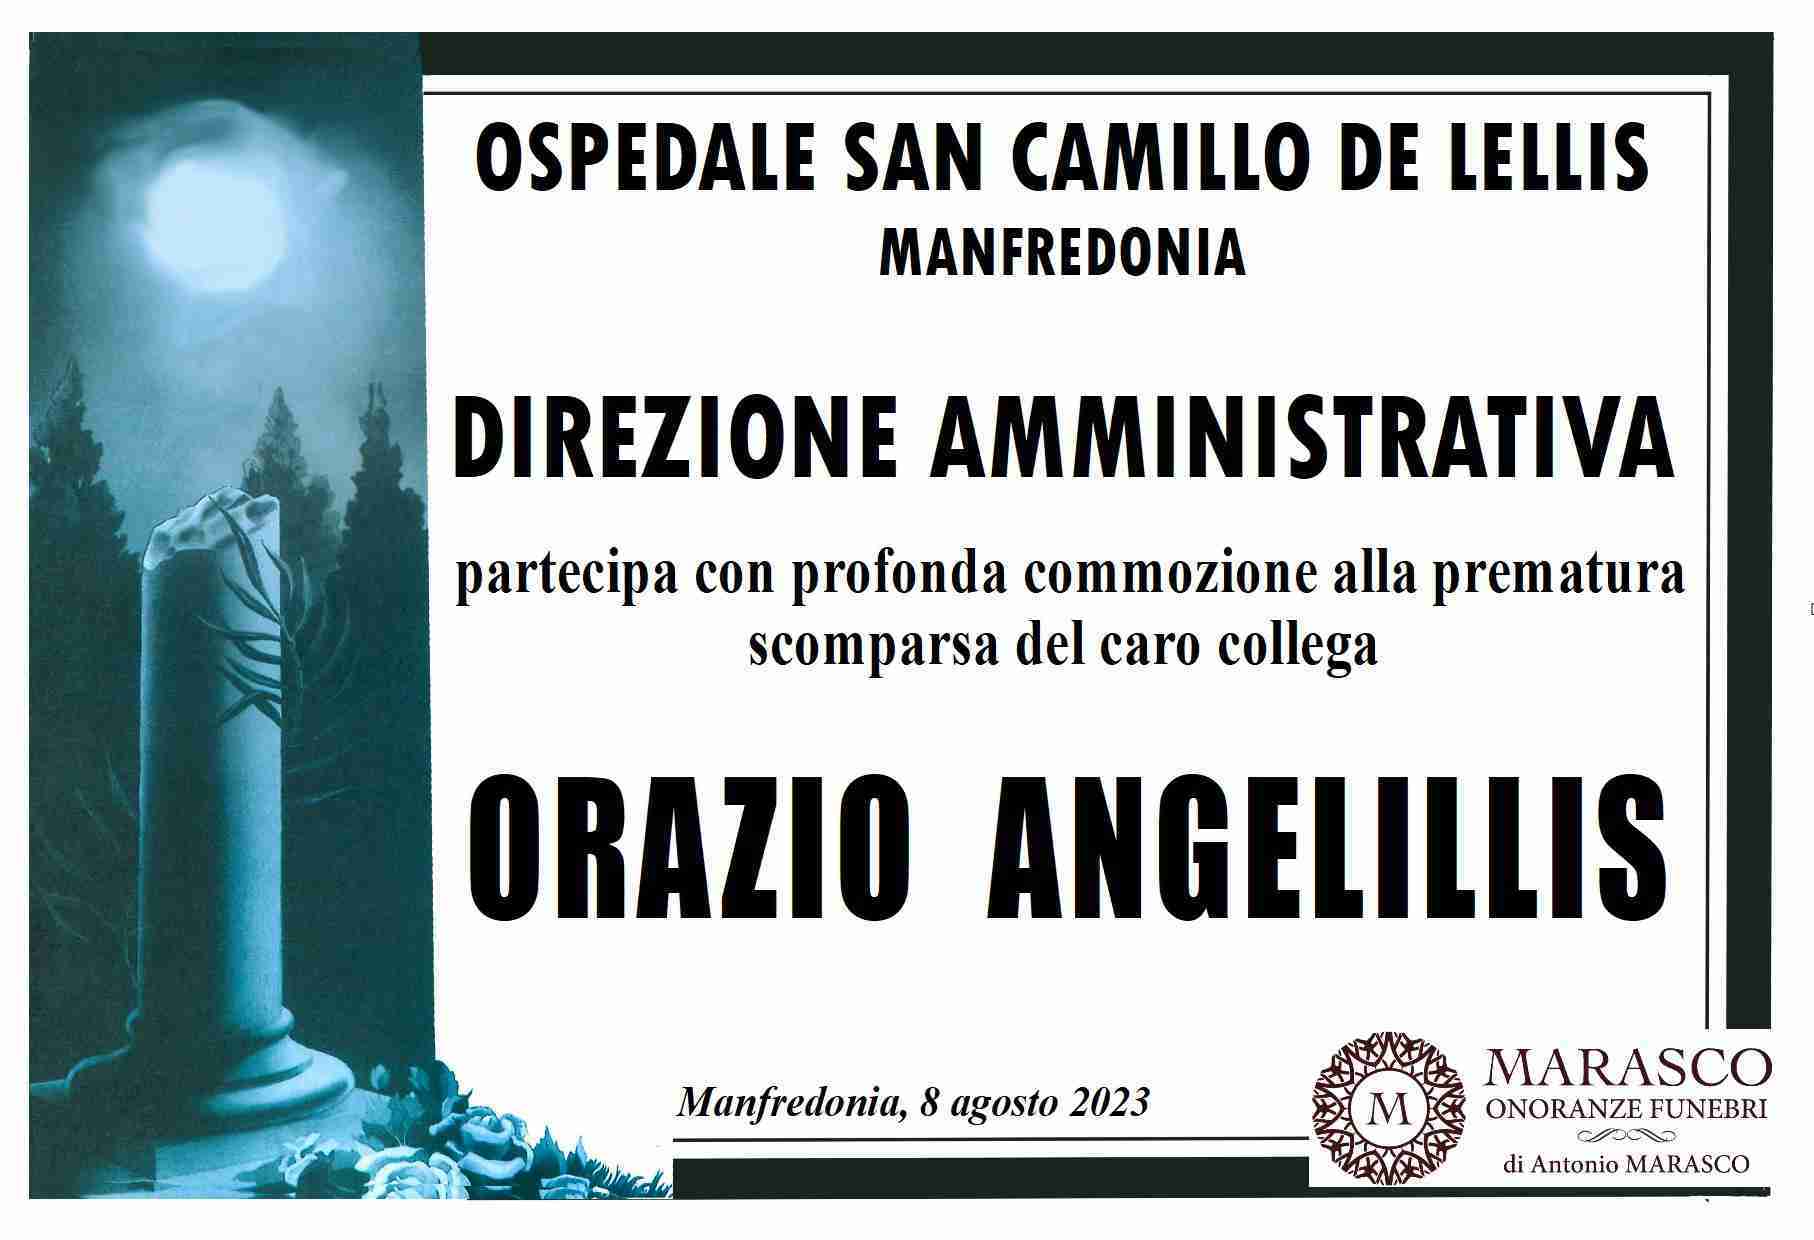 Orazio Angelillis